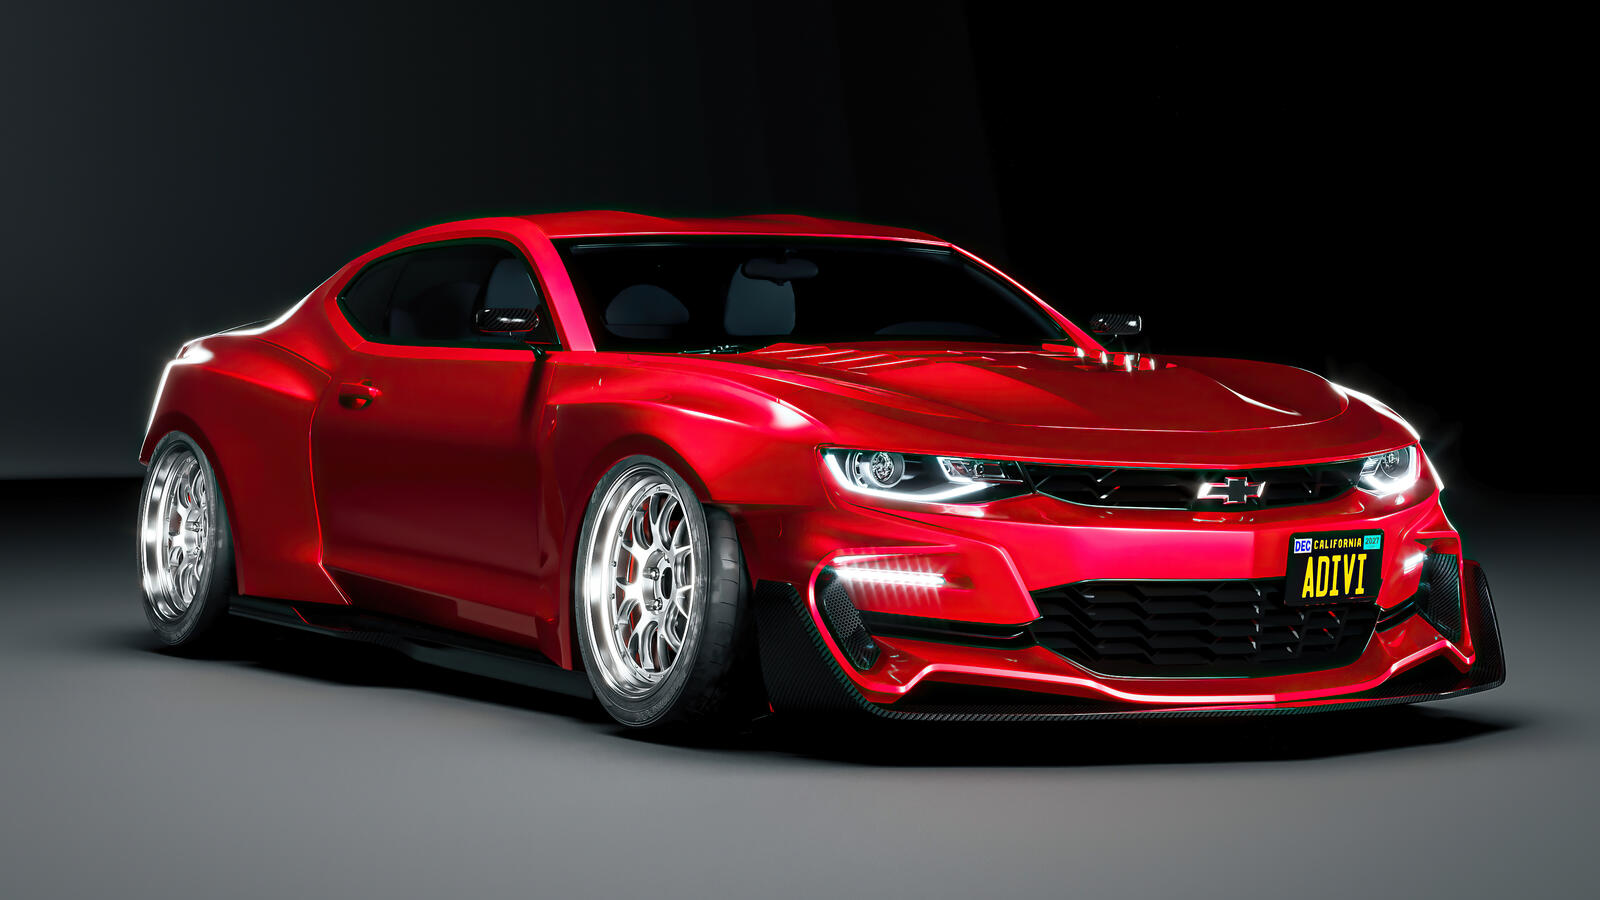 Wallpapers Chevrolet rendering red car on the desktop